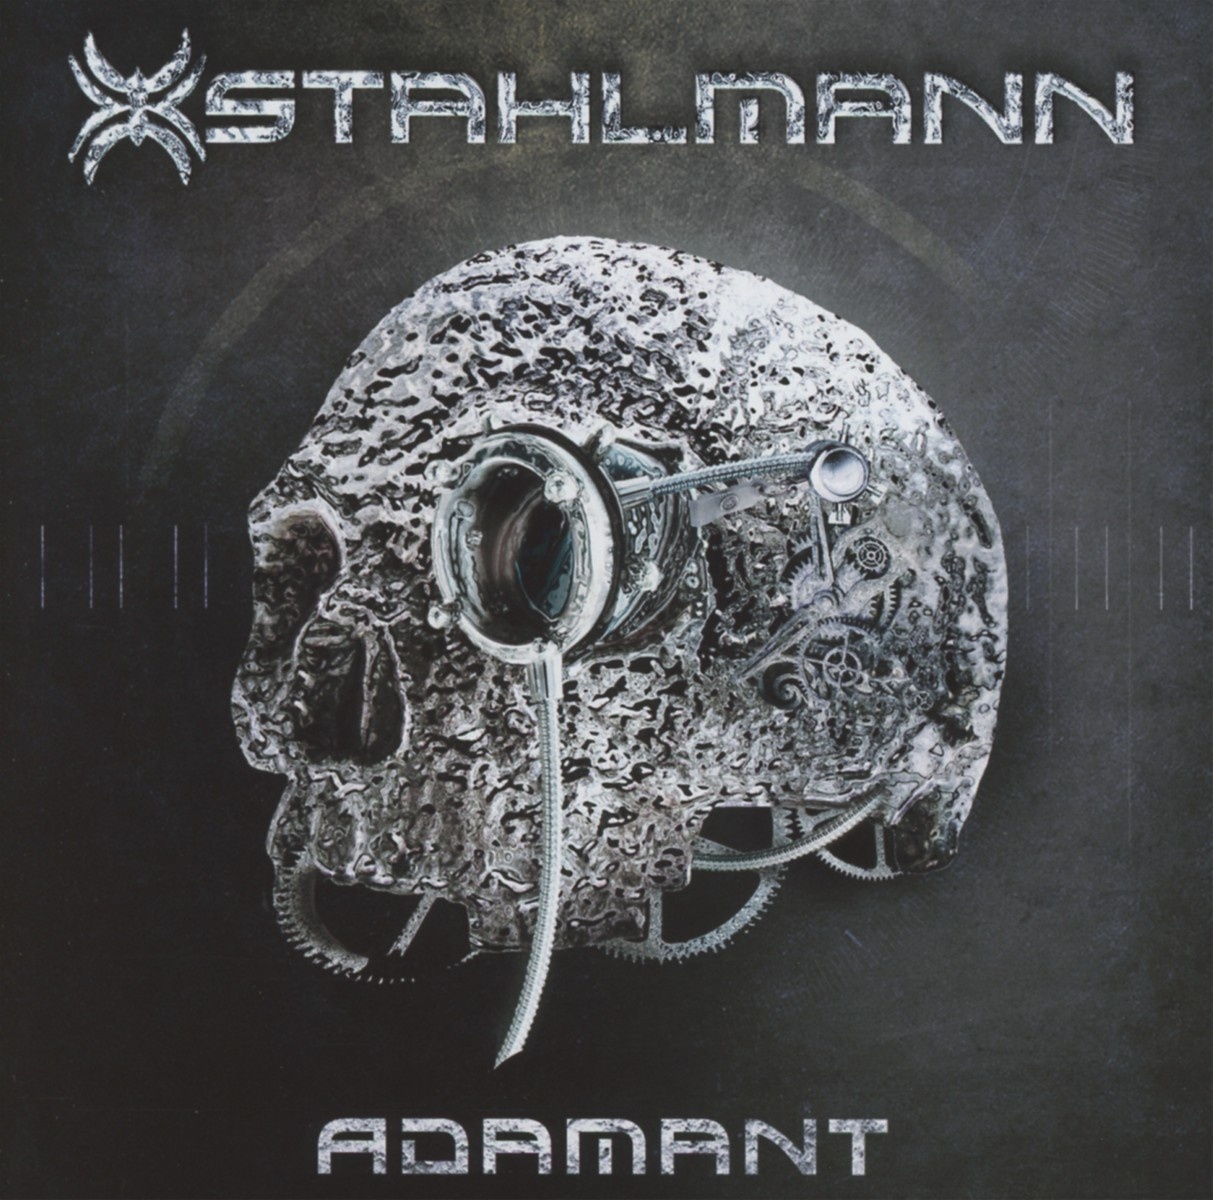 Adamant - Stahlmann. (CD)